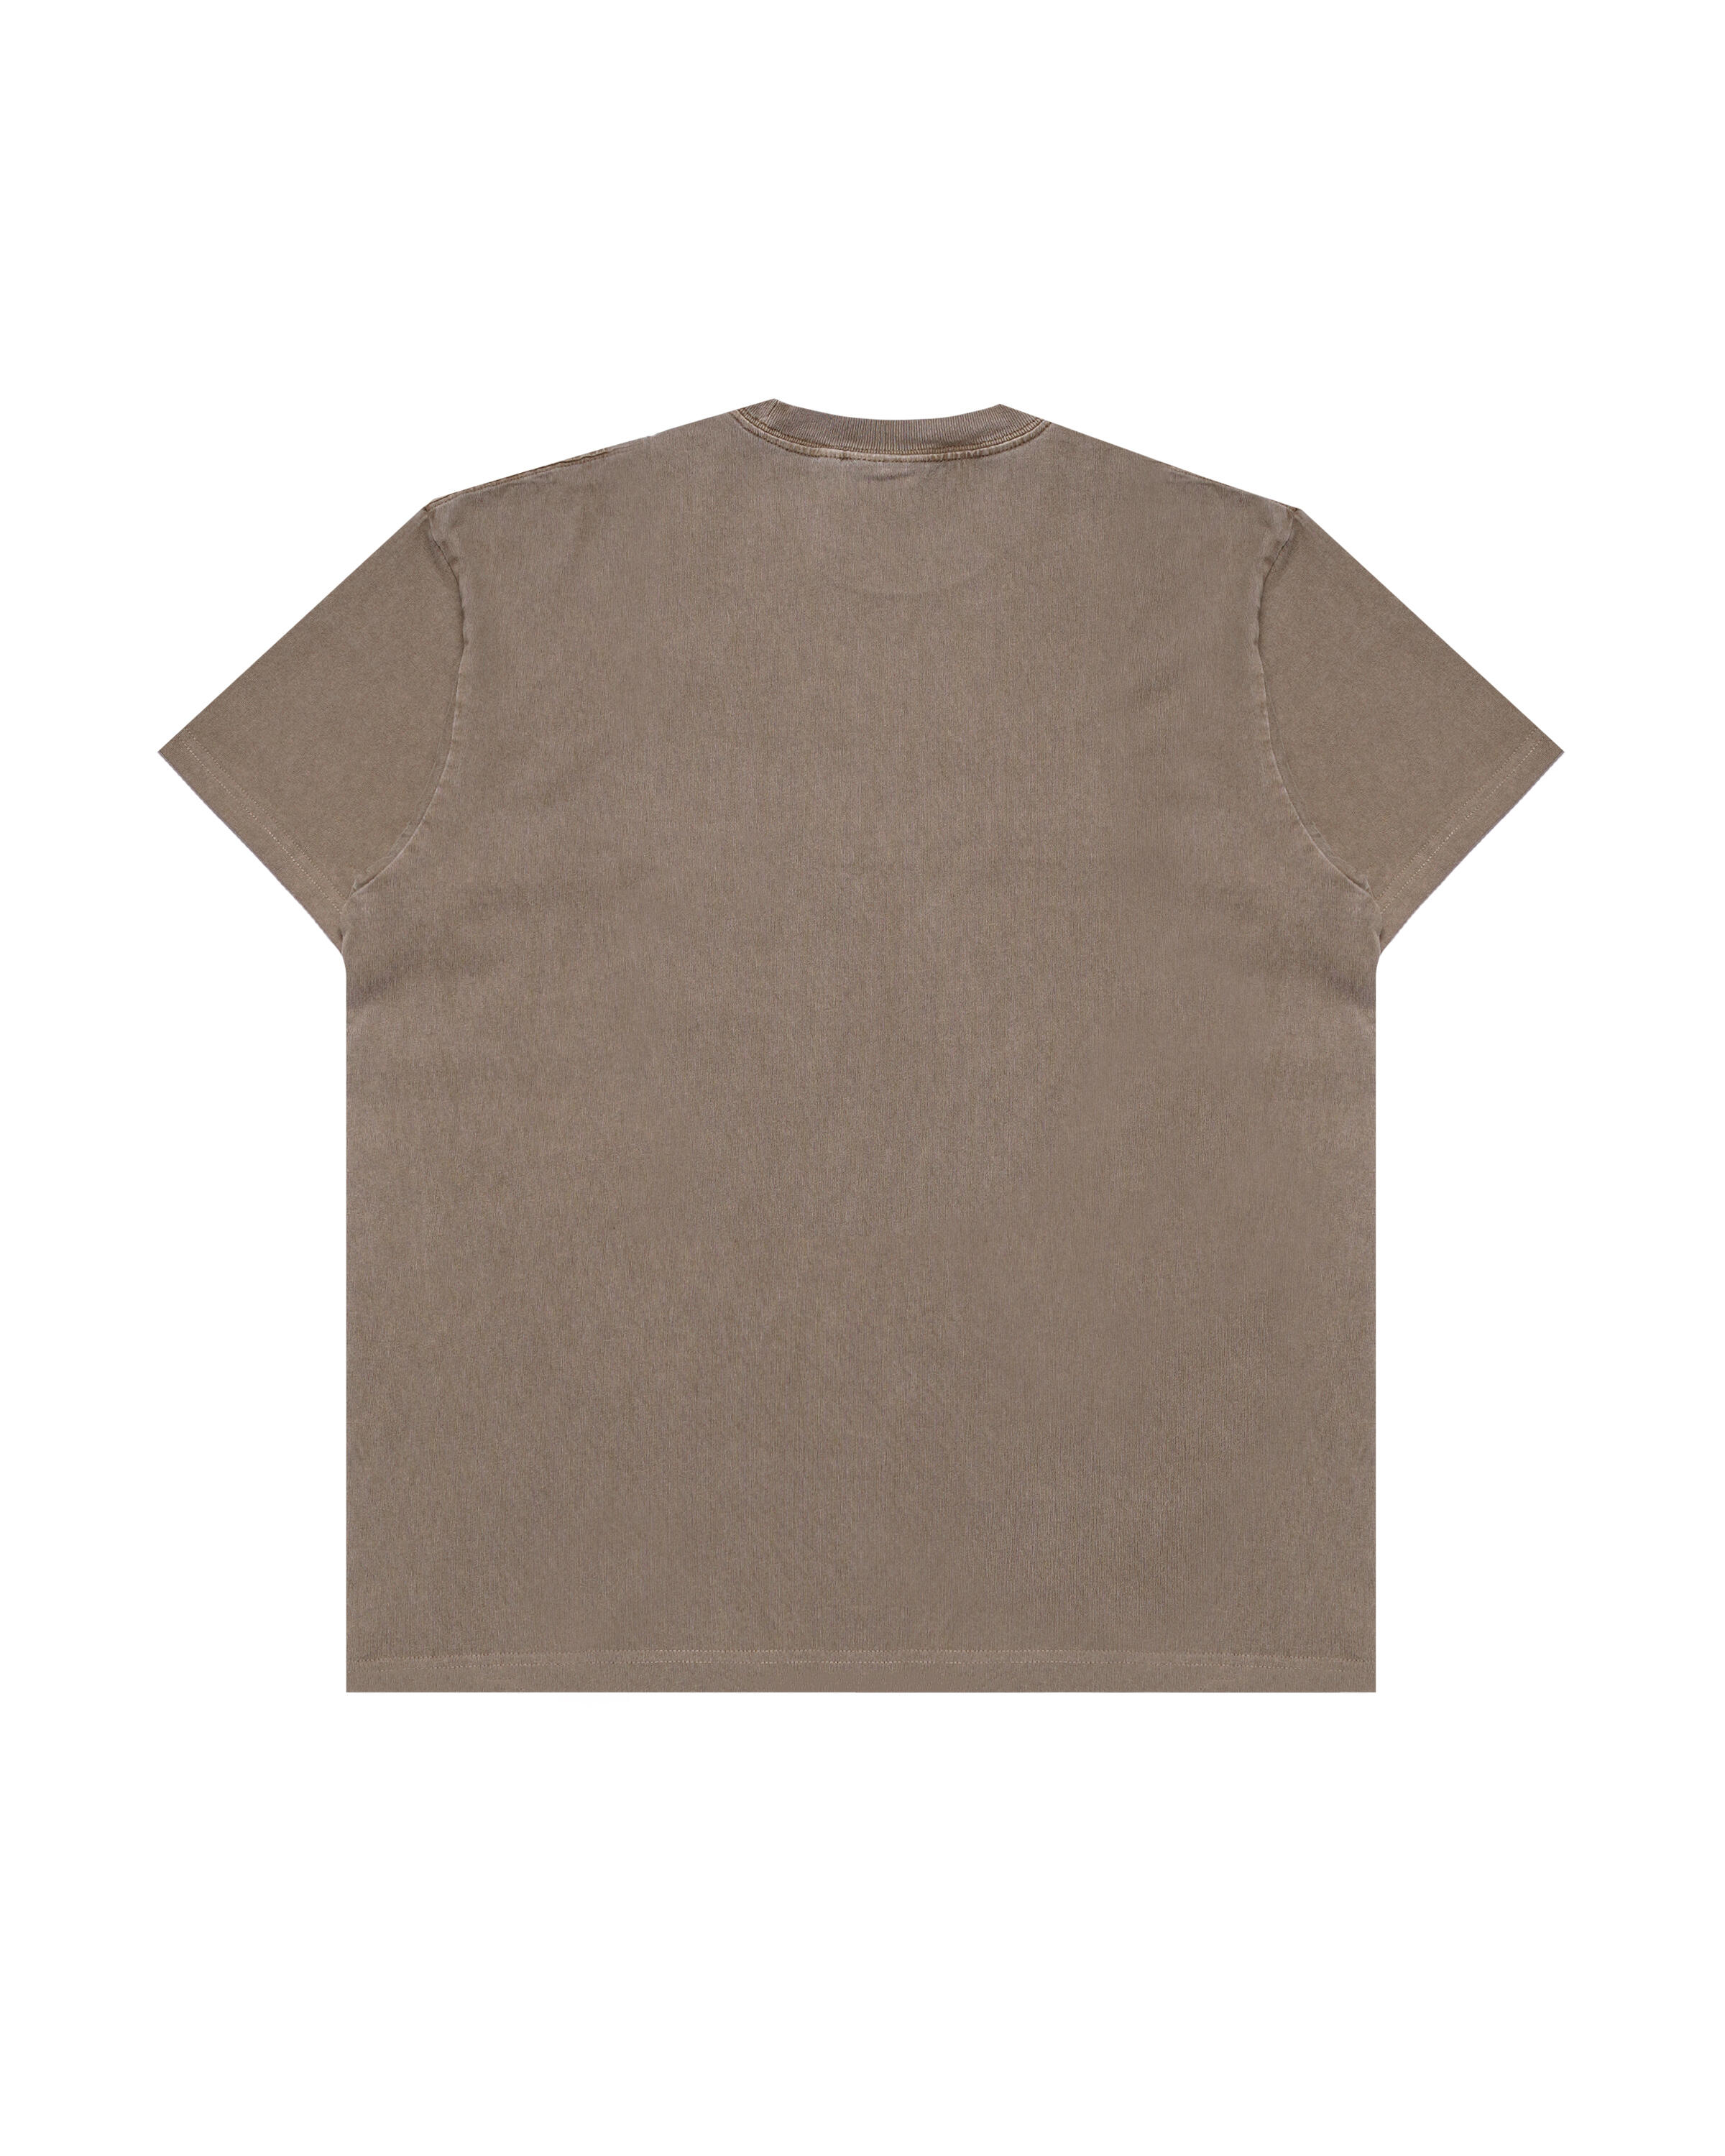 Carhartt WIP S/S Duster T-Shirt